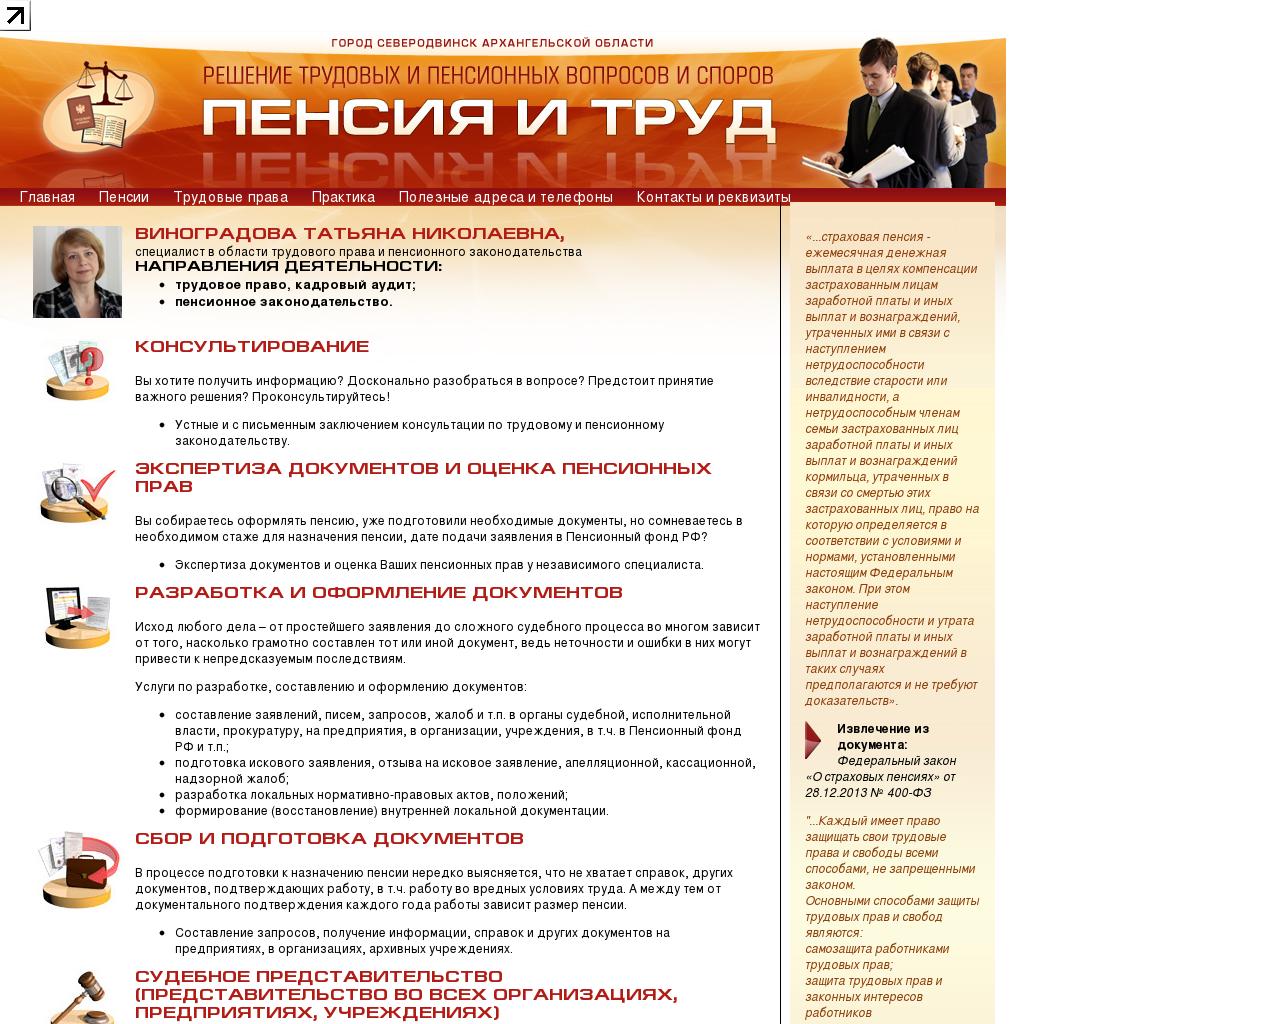 Изображение сайта трудпенсия.рф в разрешении 1280x1024